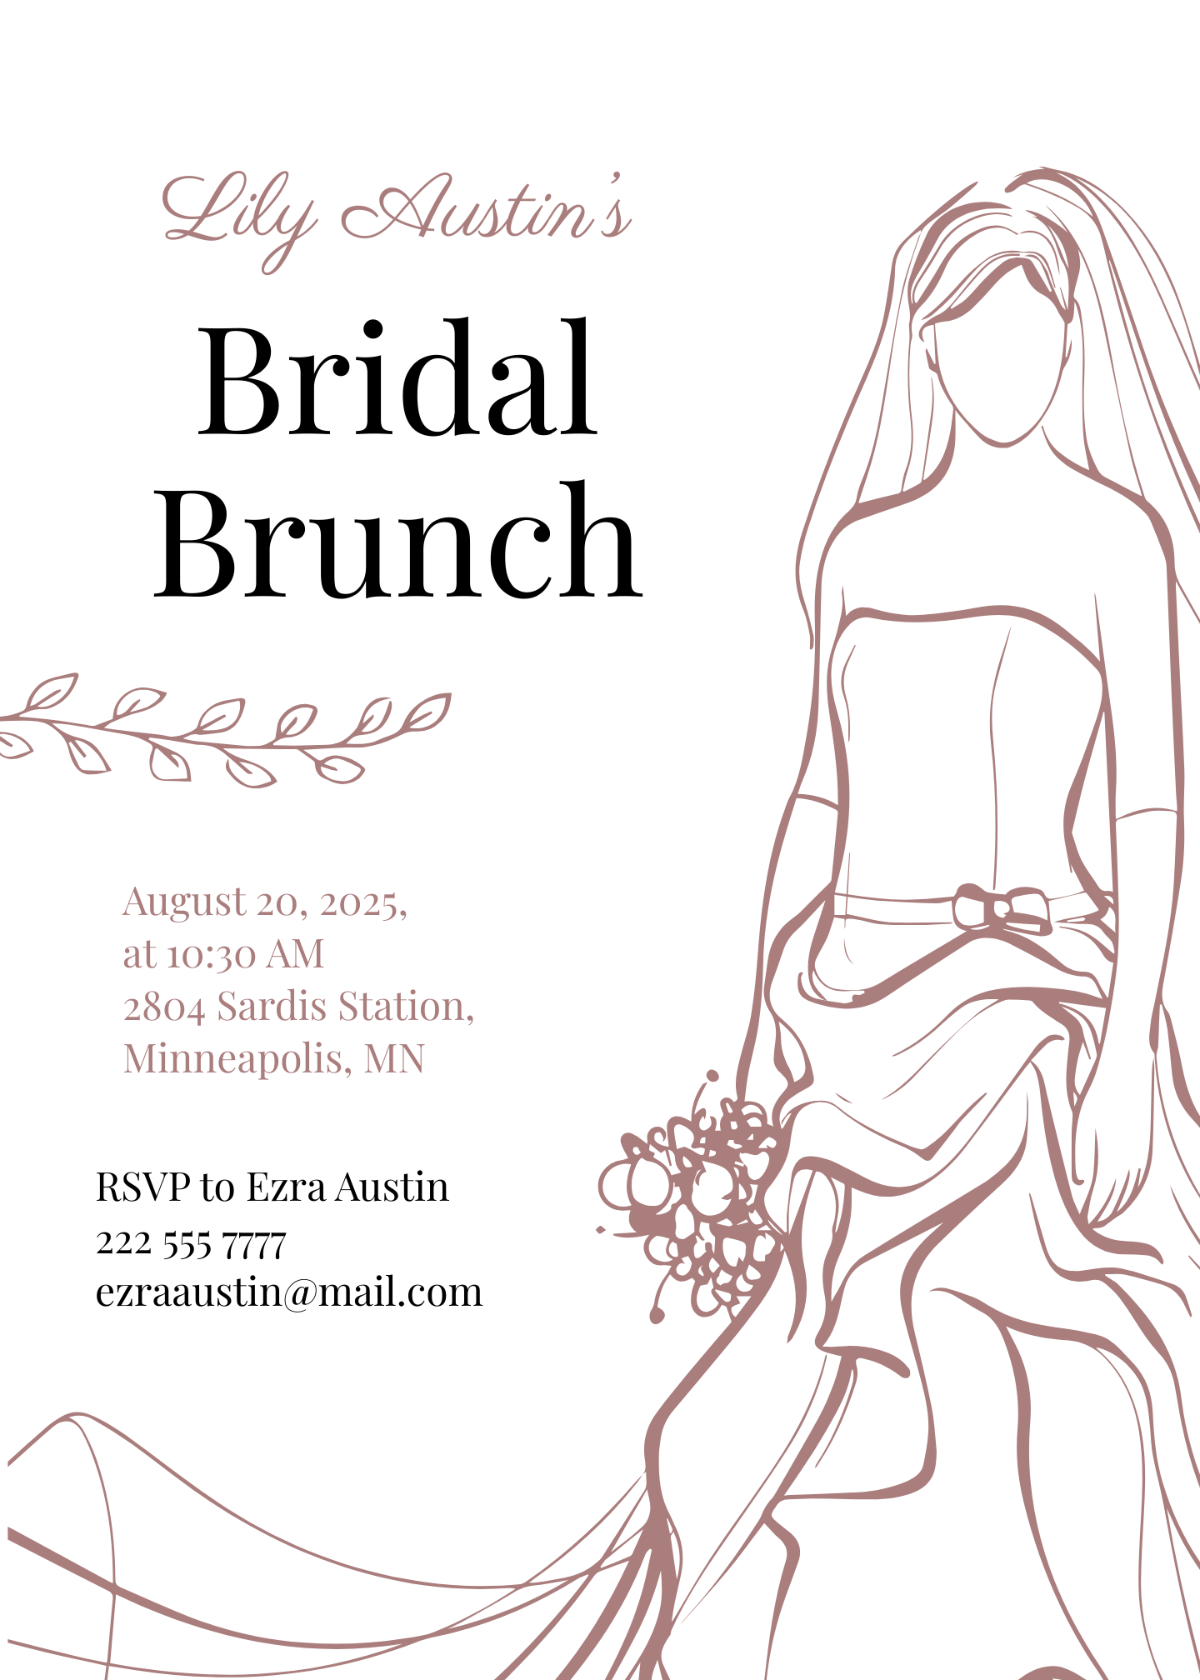 Bridal Shower brunch invitation